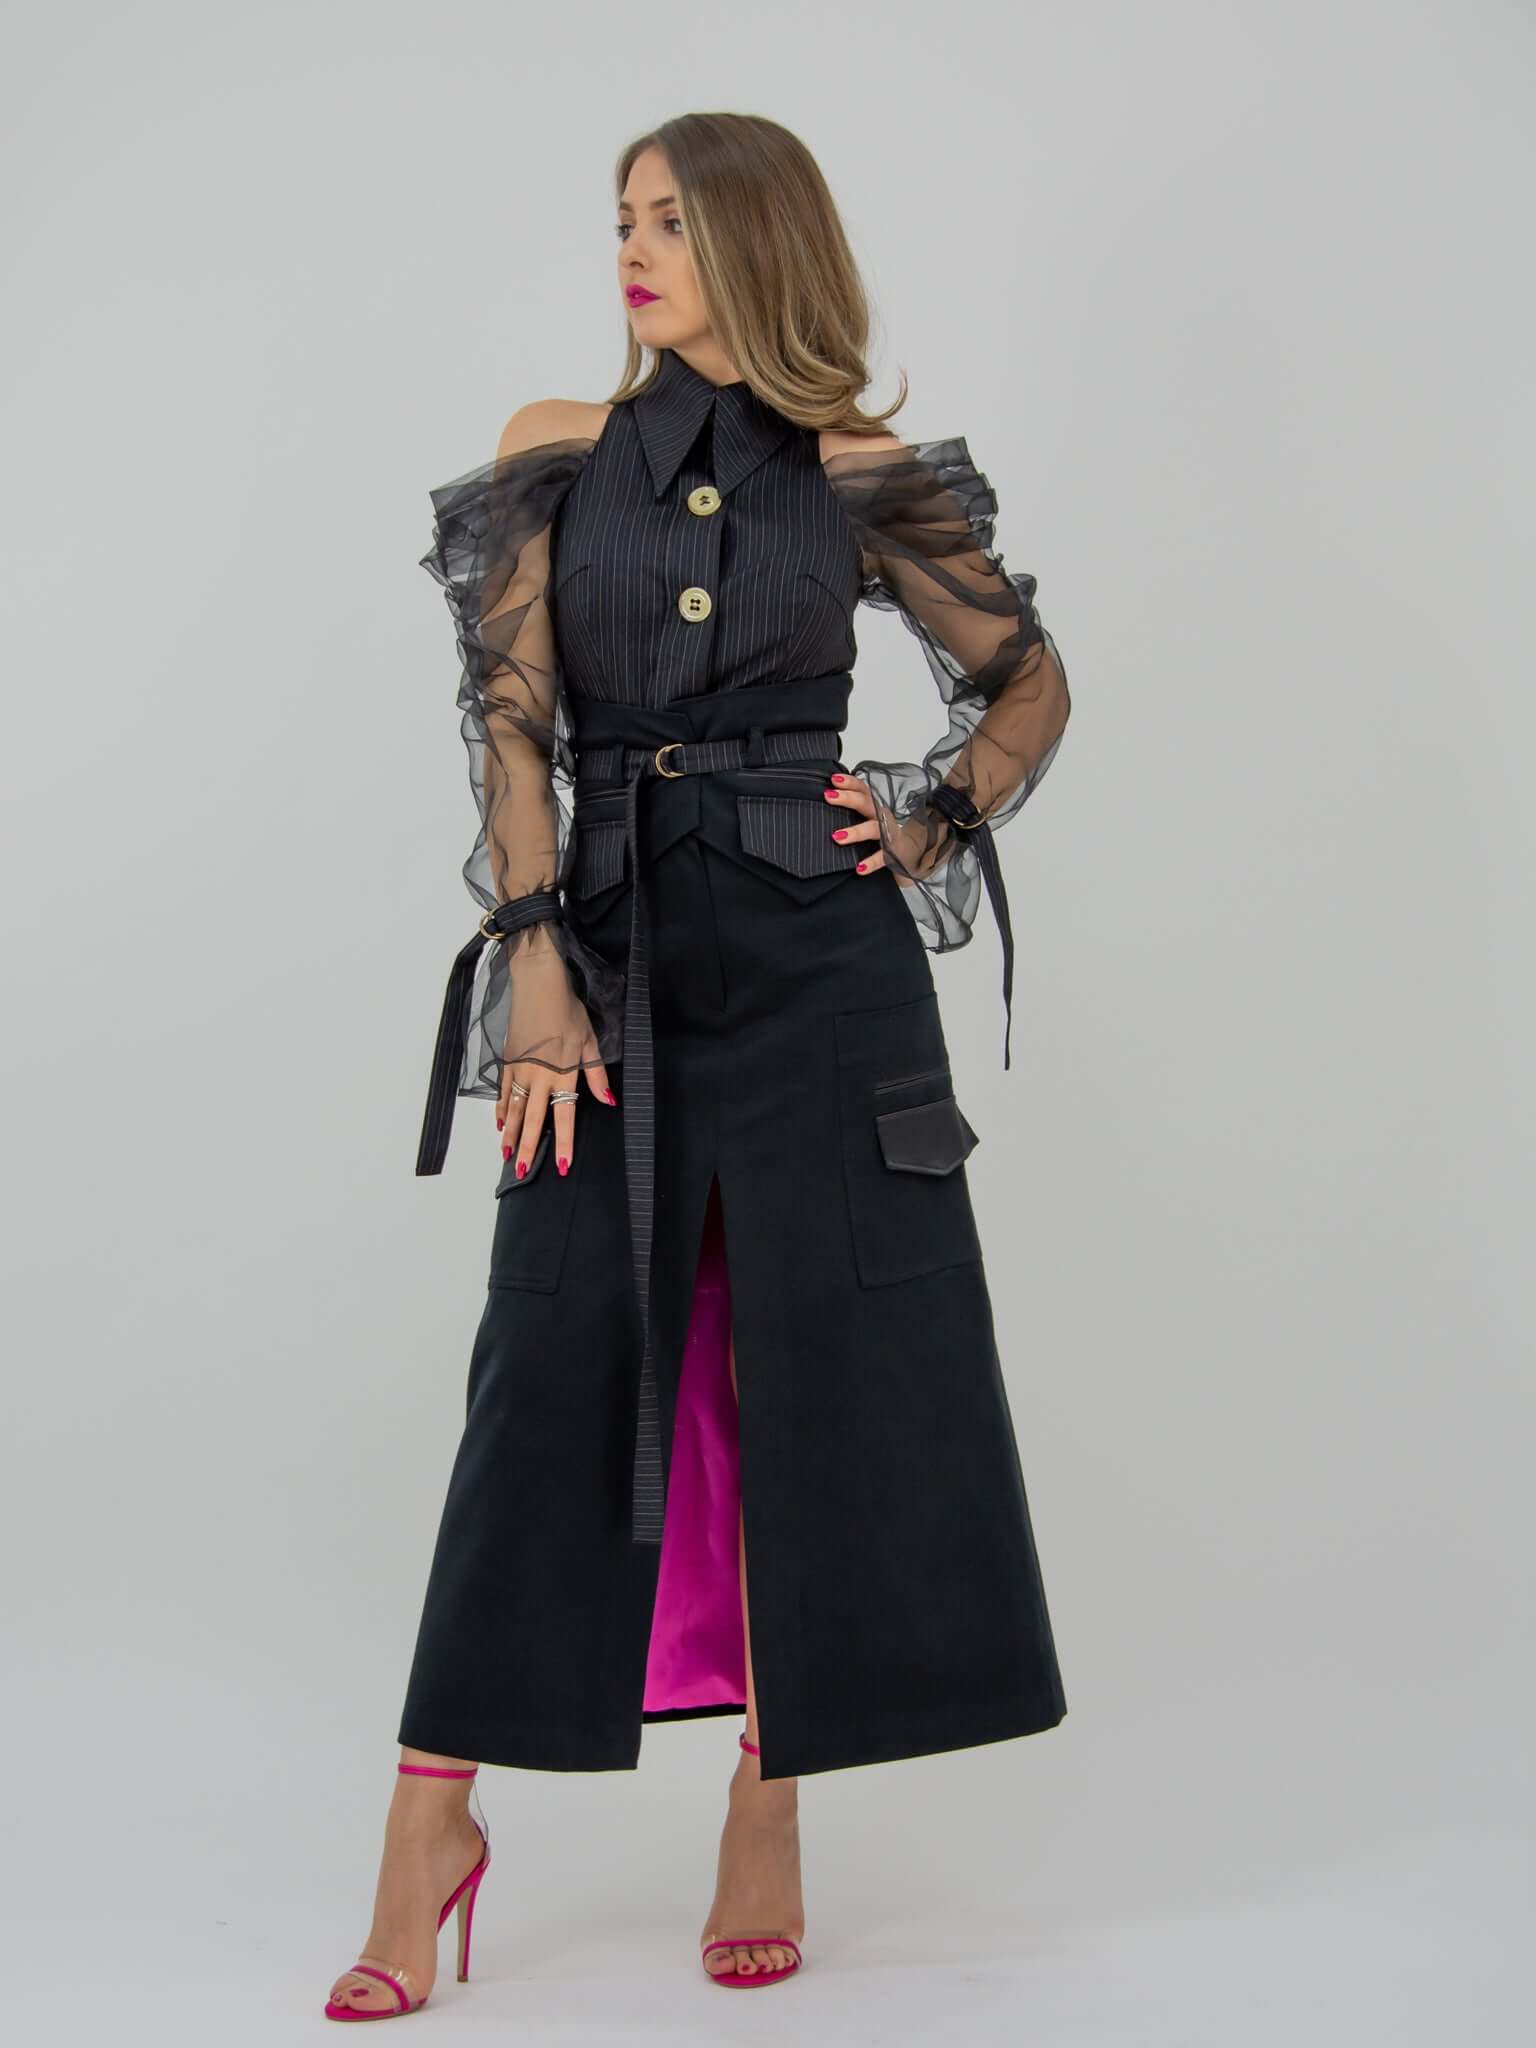 Black of the Net High-Waist Maxi Skirt by Tia Dorraine Women's Luxury Fashion Designer Clothing Brand